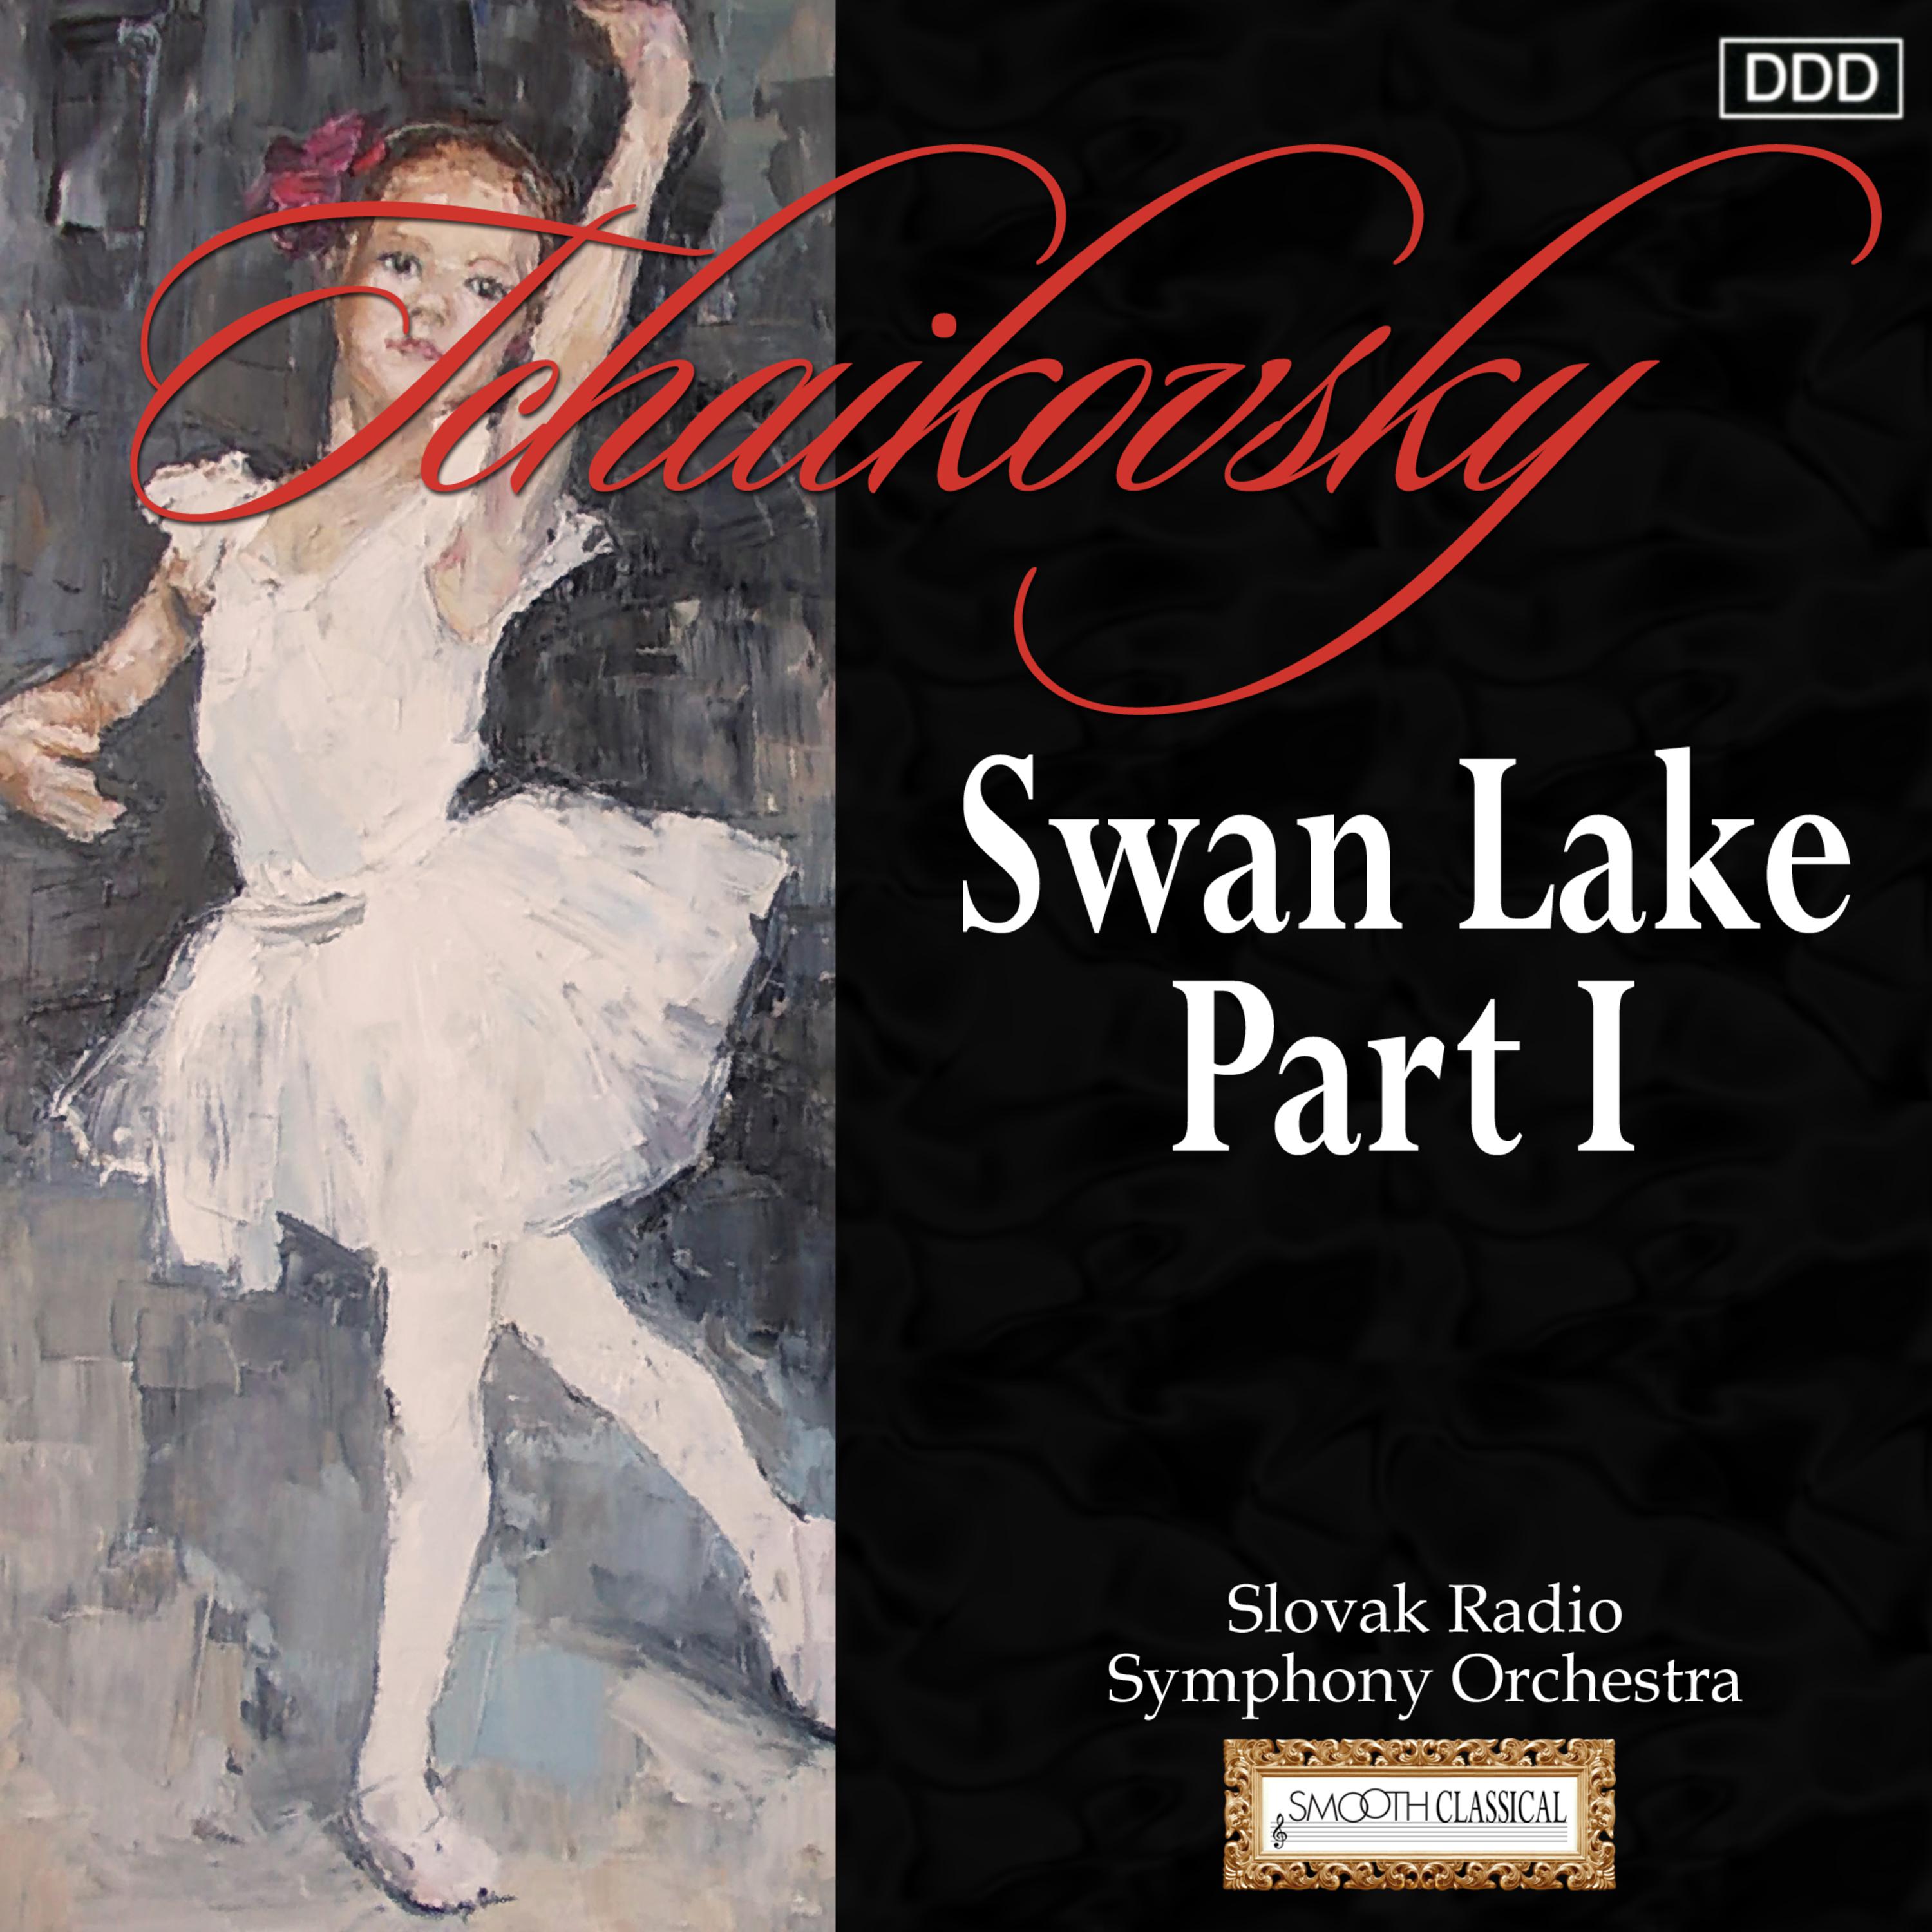 Swan Lake, Op. 20a, Act II: By a Lake: Scene: Entrance of Prince Siegfried - Odette appears